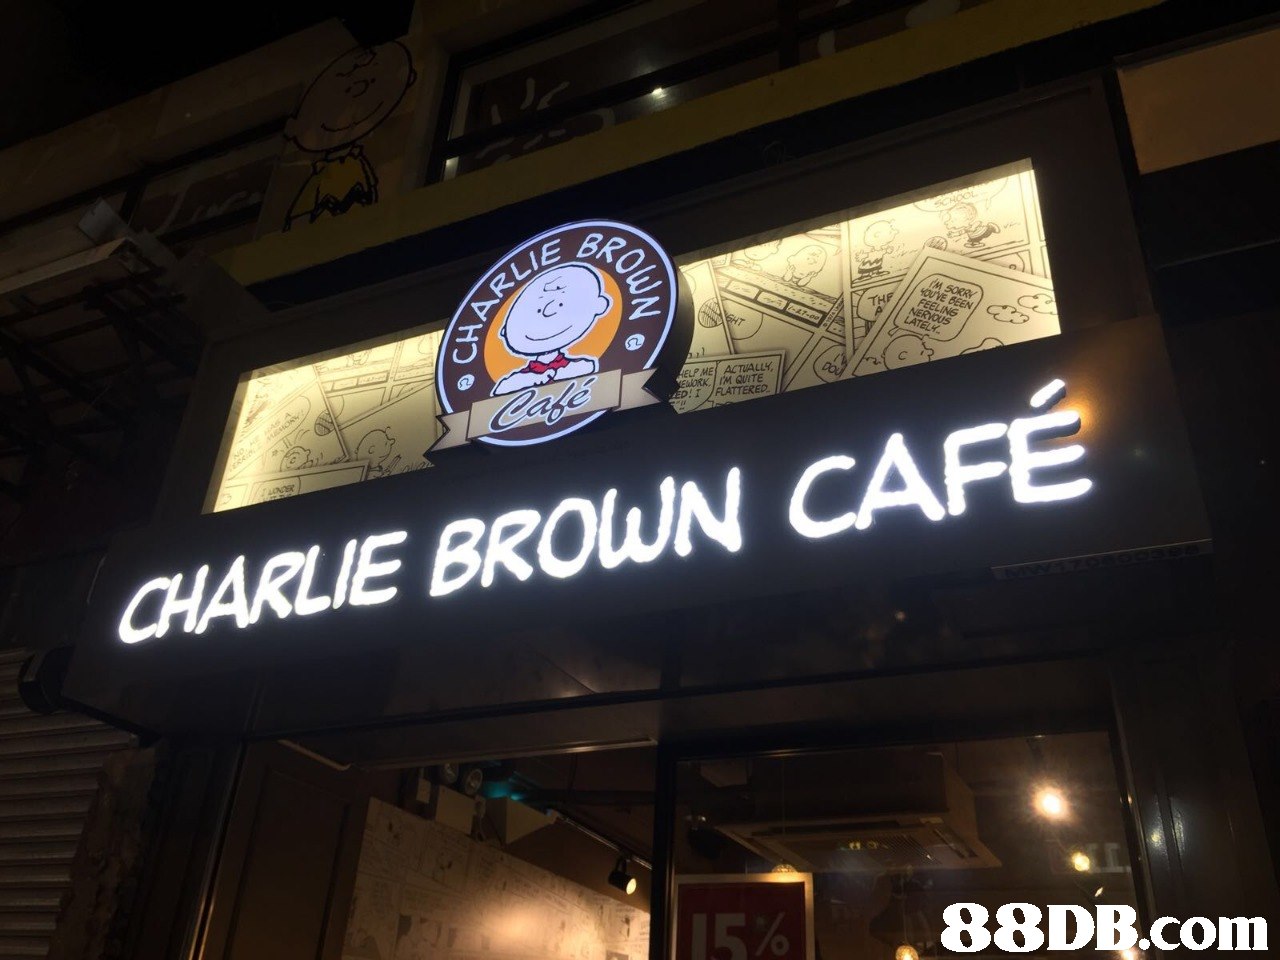 "С ELPME ACTUALLY ORK M QUITE CHARLIE BROWN CAFE 88DB.com  signage